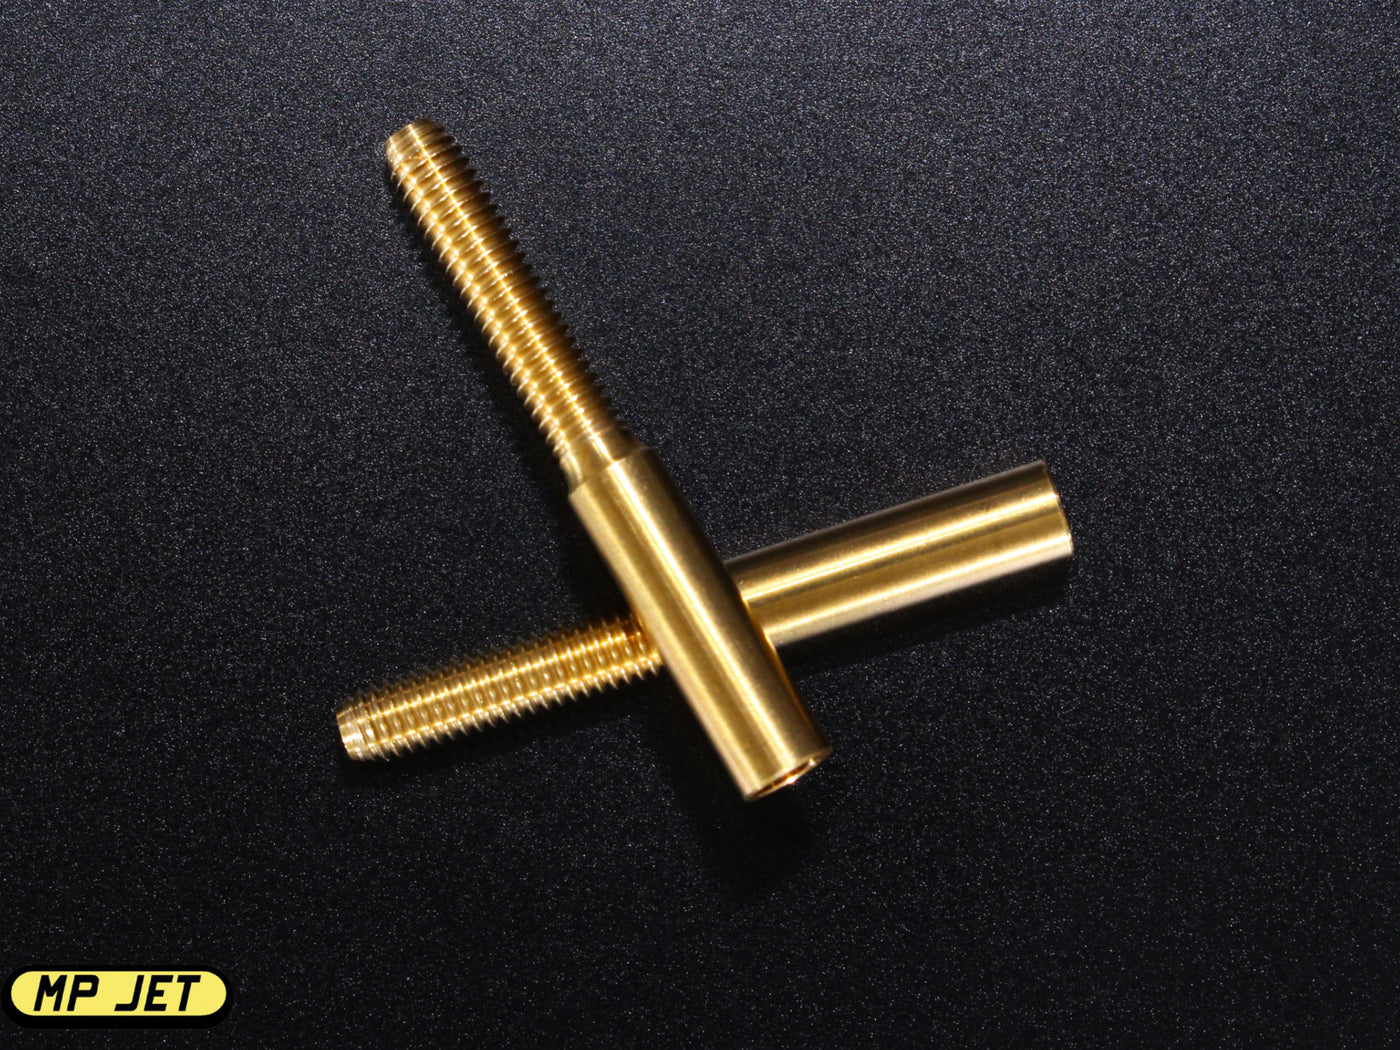 MP Jet Brass Threaded Coupler / Solder on / ID 4mm / 37mm long / M4 thread